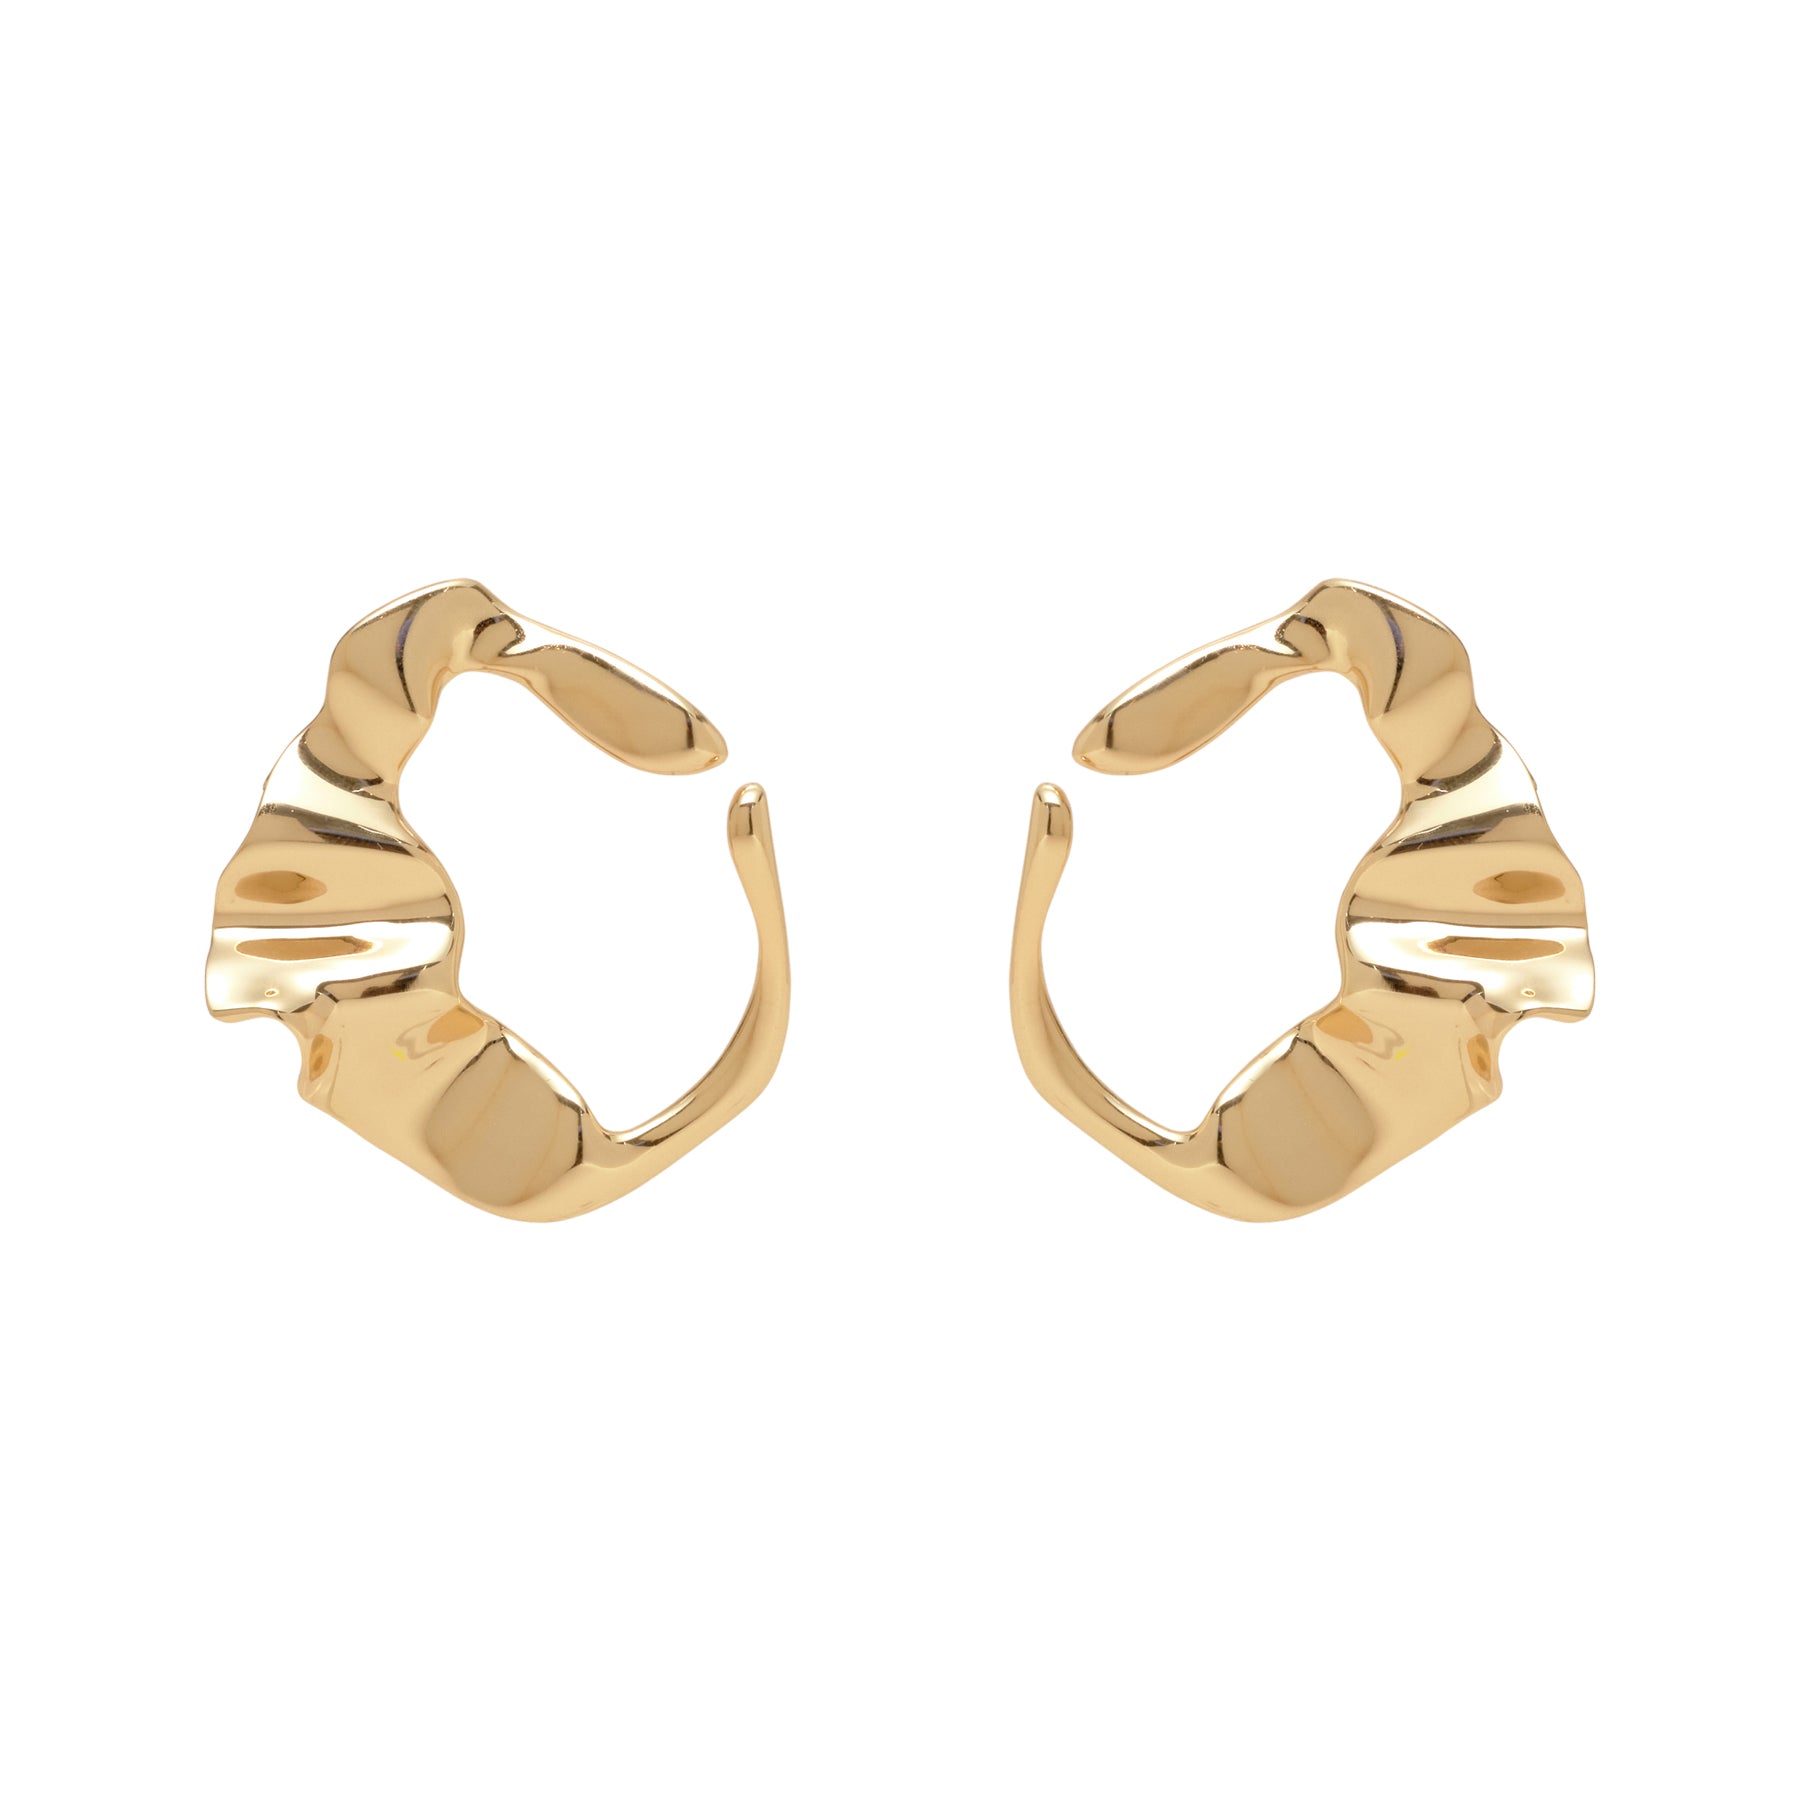 Organic Gold Stud Earrings on Flat White Background